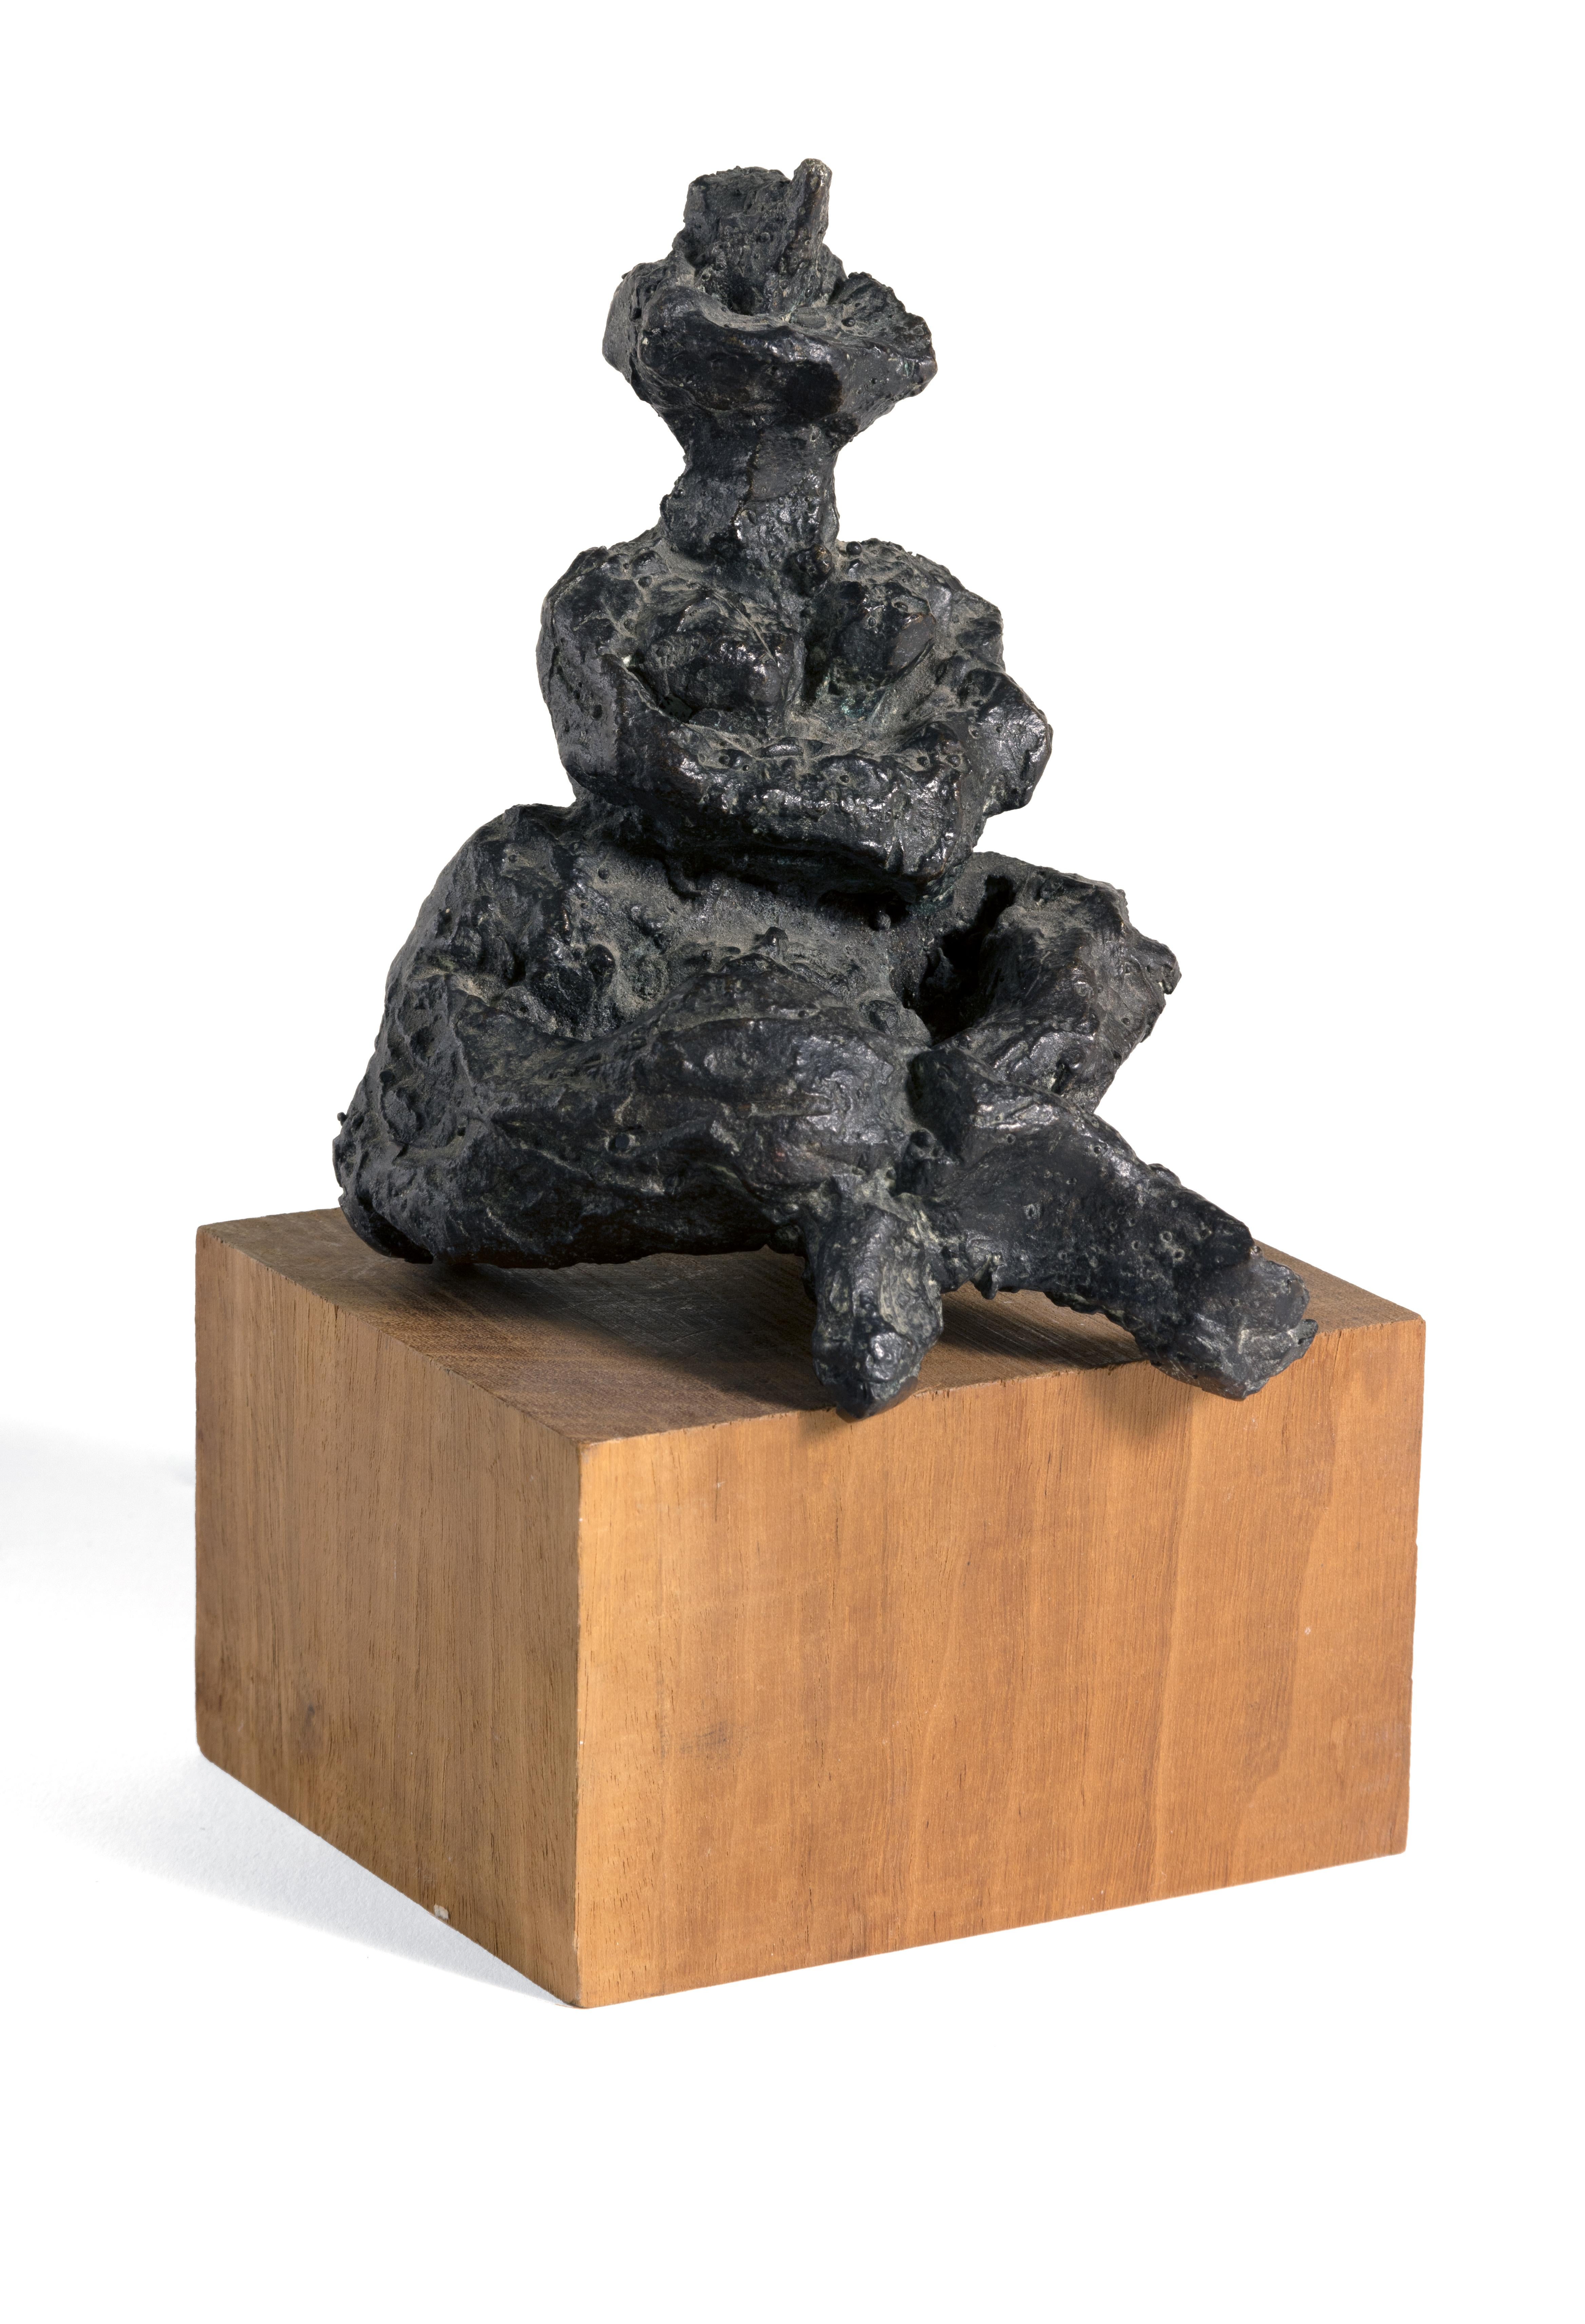 Reuben Kadish Figurative Sculpture - Seated Woman with Criss-Cross Legs